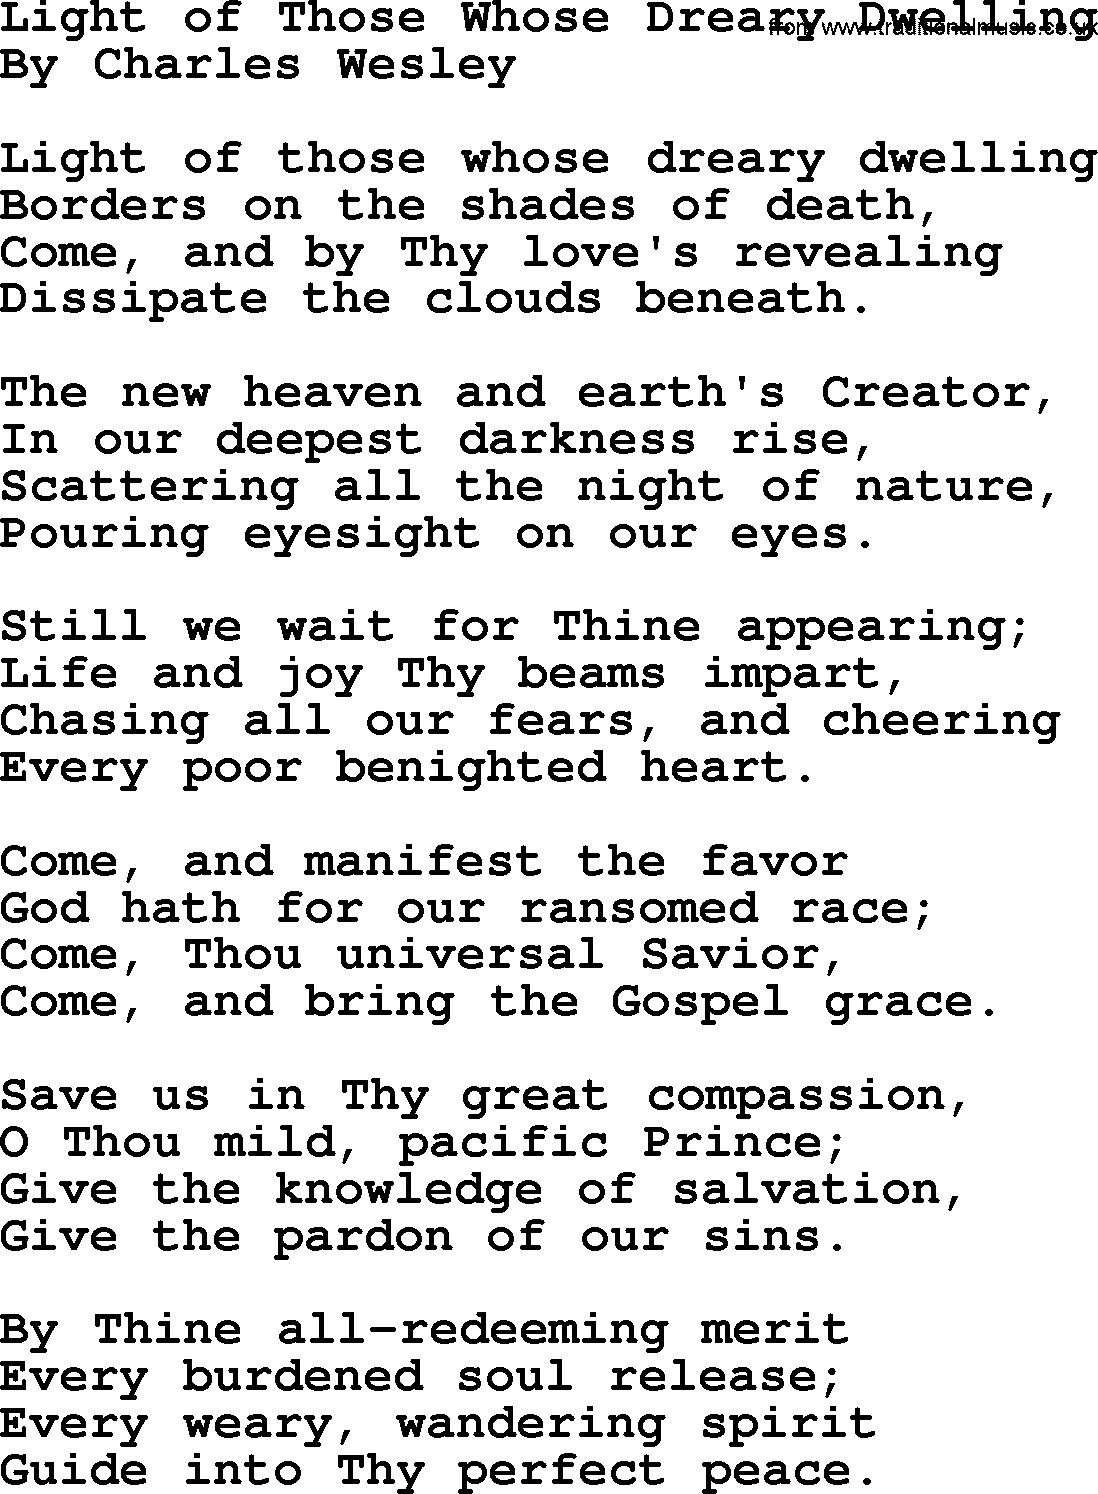 Charles Wesley hymn: Light Of Those Whose Dreary Dwelling, lyrics